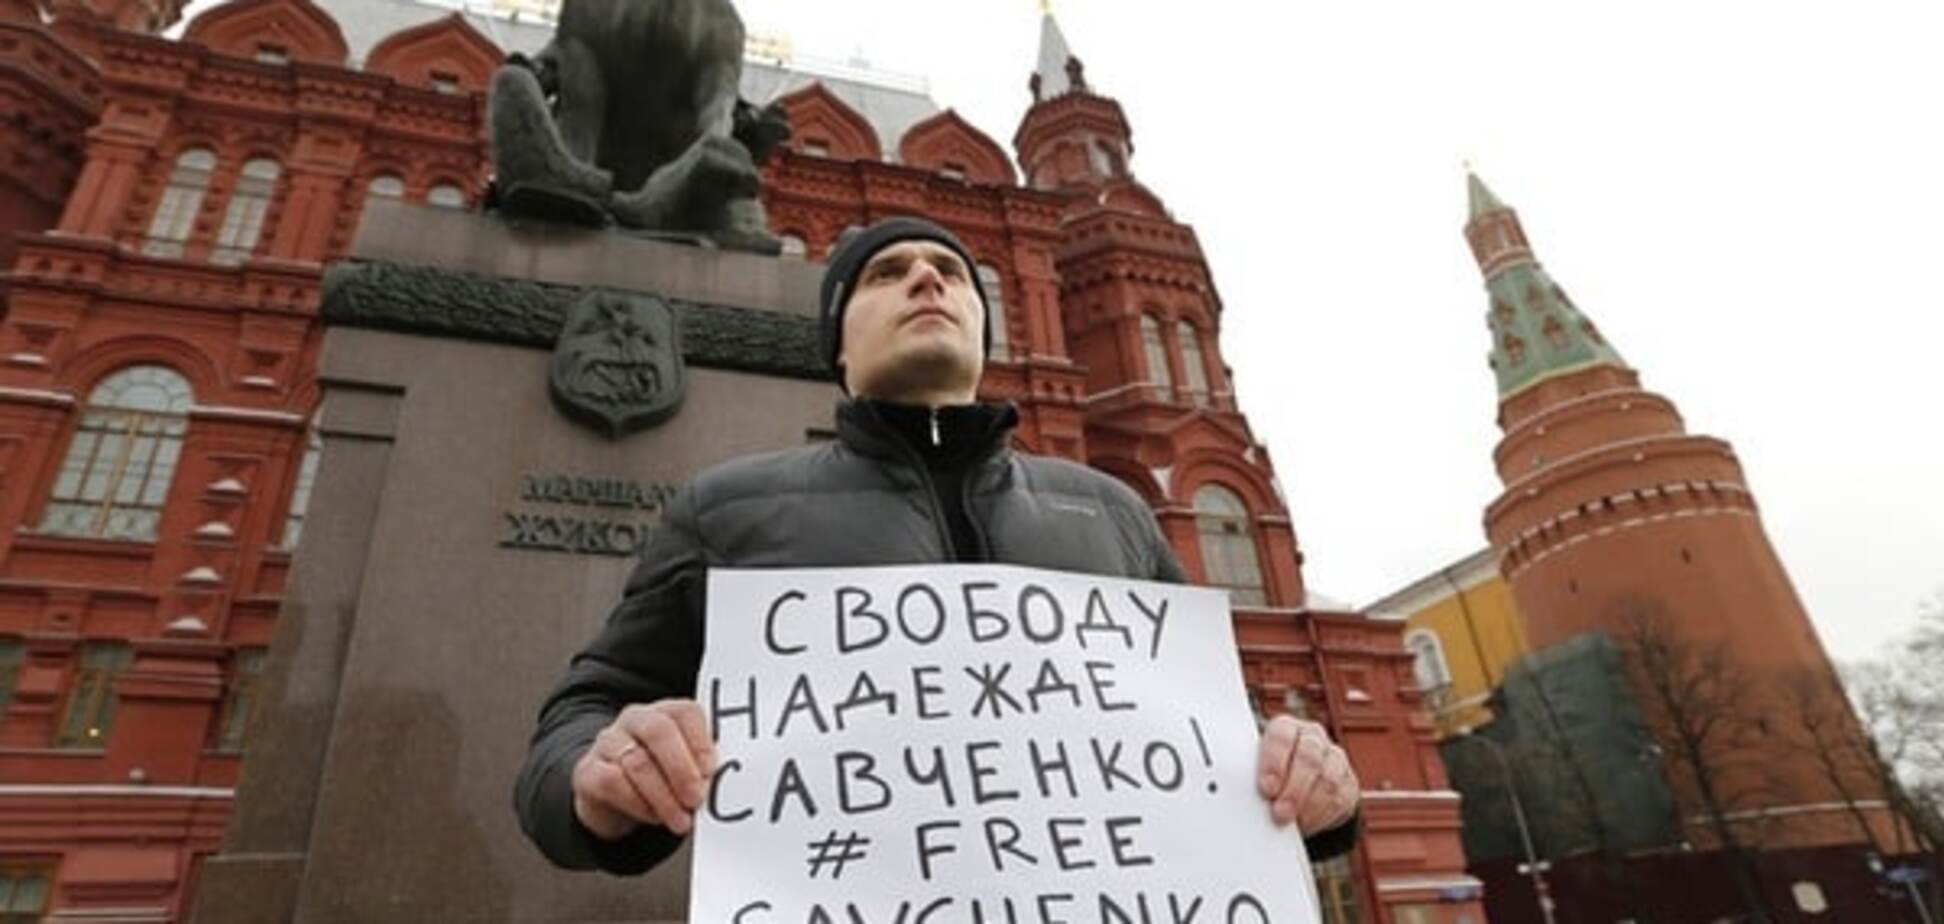 free savchenko